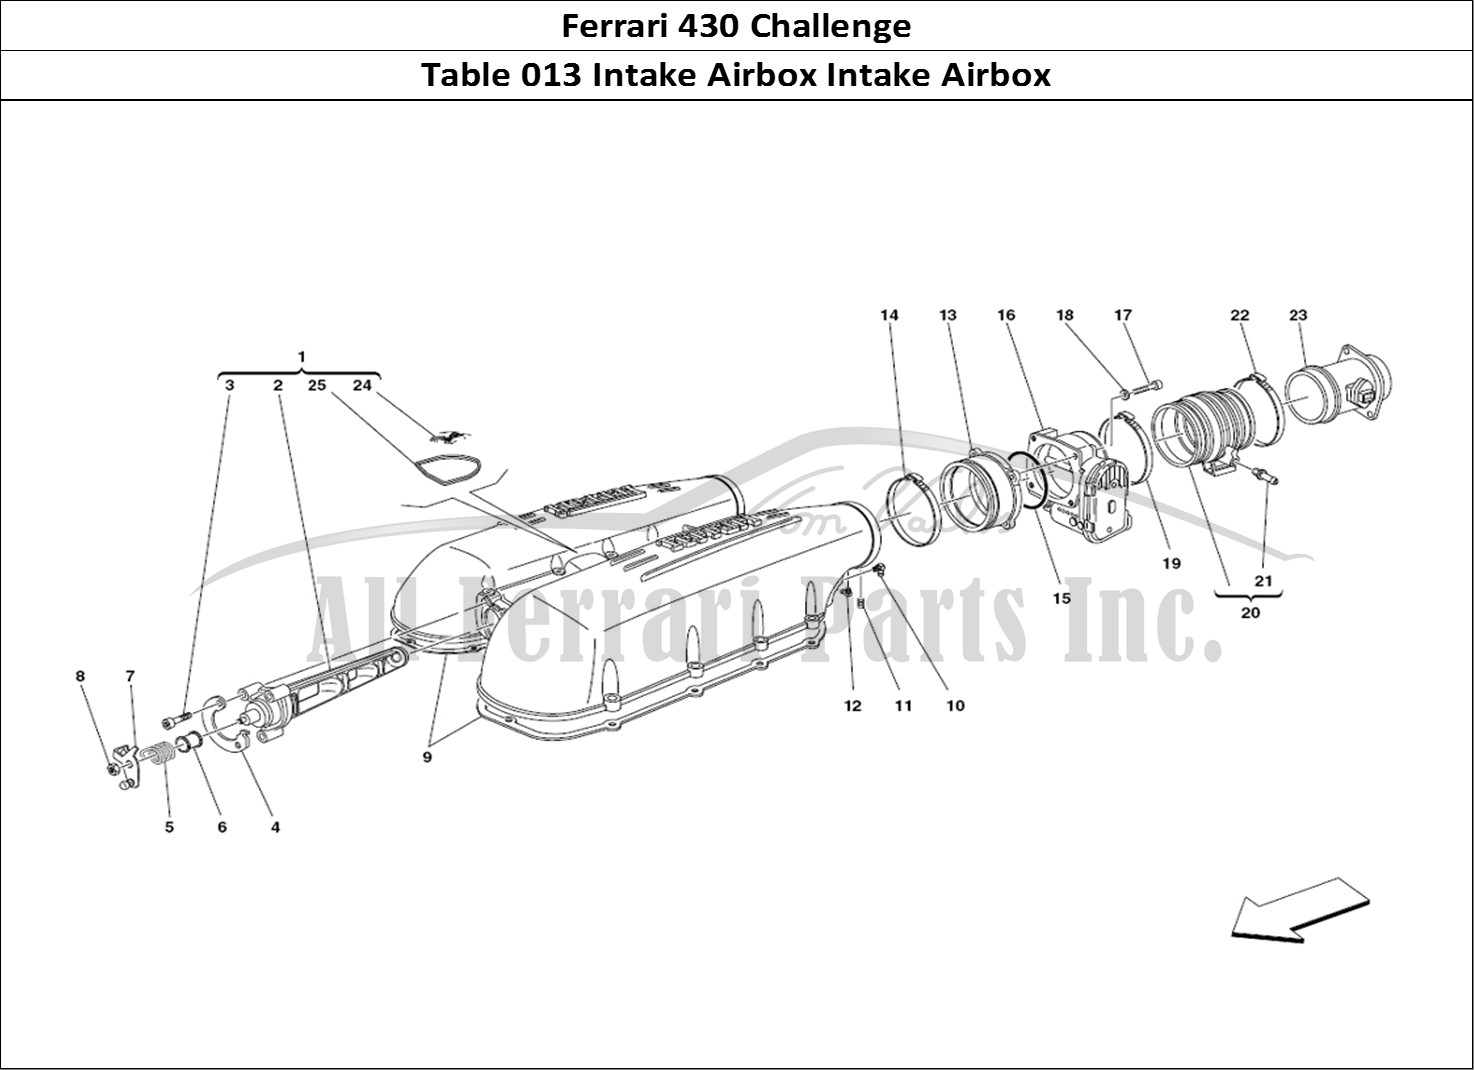 Ferrari Parts Ferrari 430 Challenge (2006) Page 013 Air Intake Manifold Cover